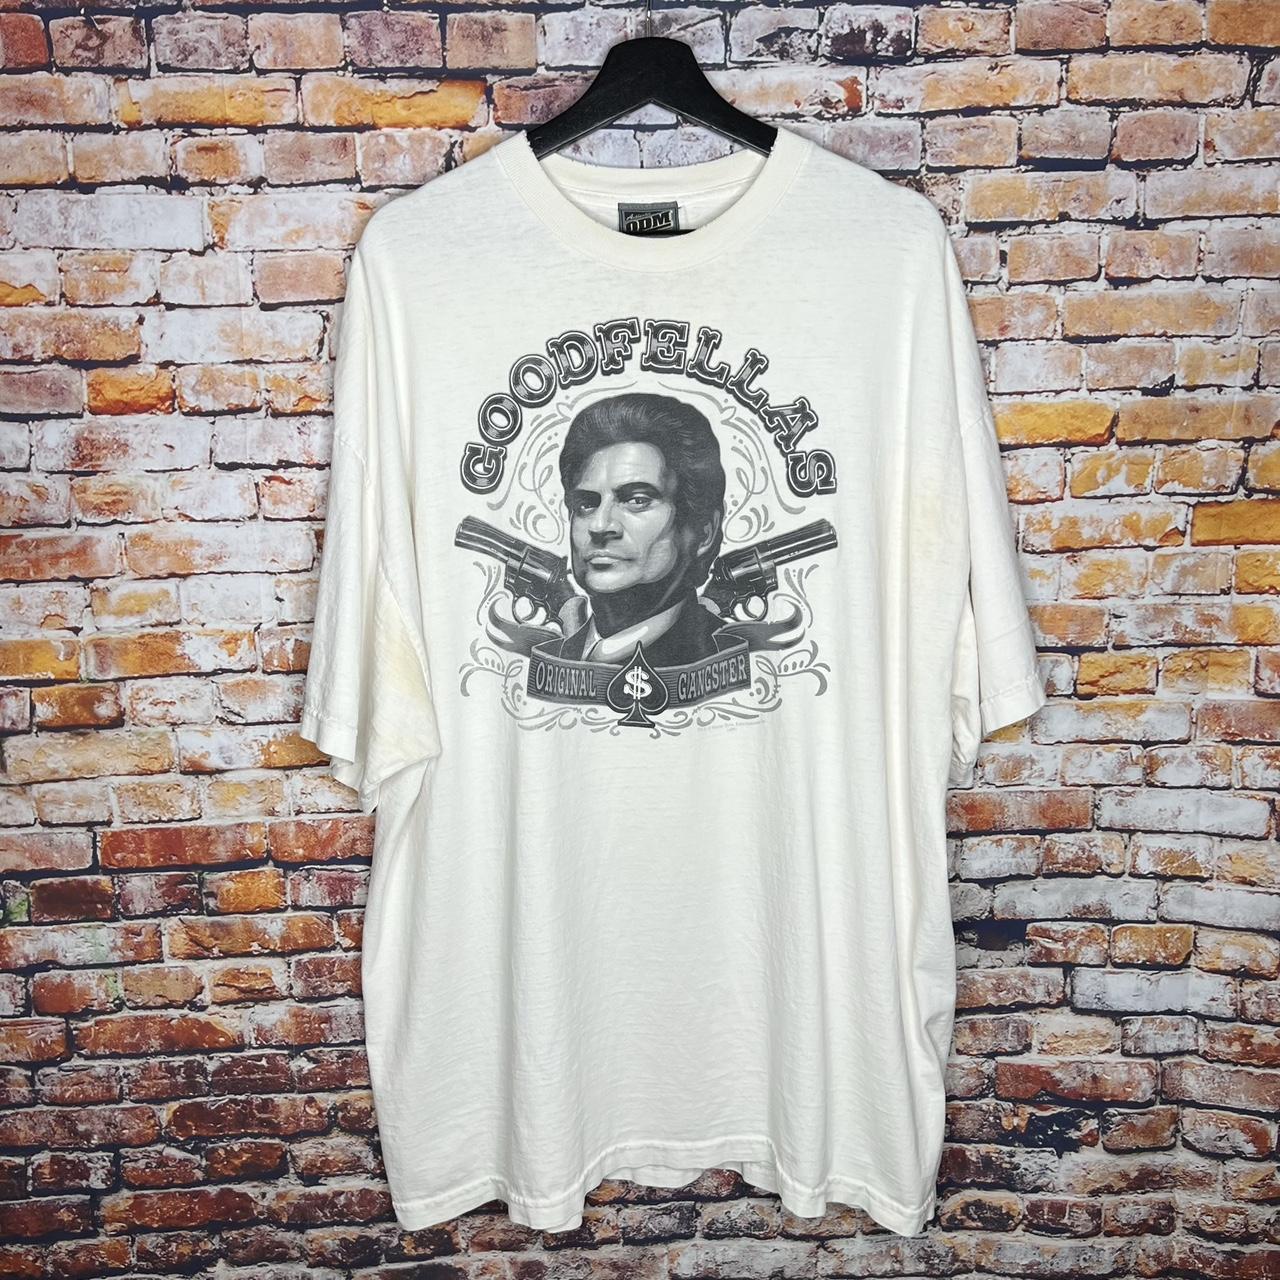 Goodfellas original gangster vintage t-shirt